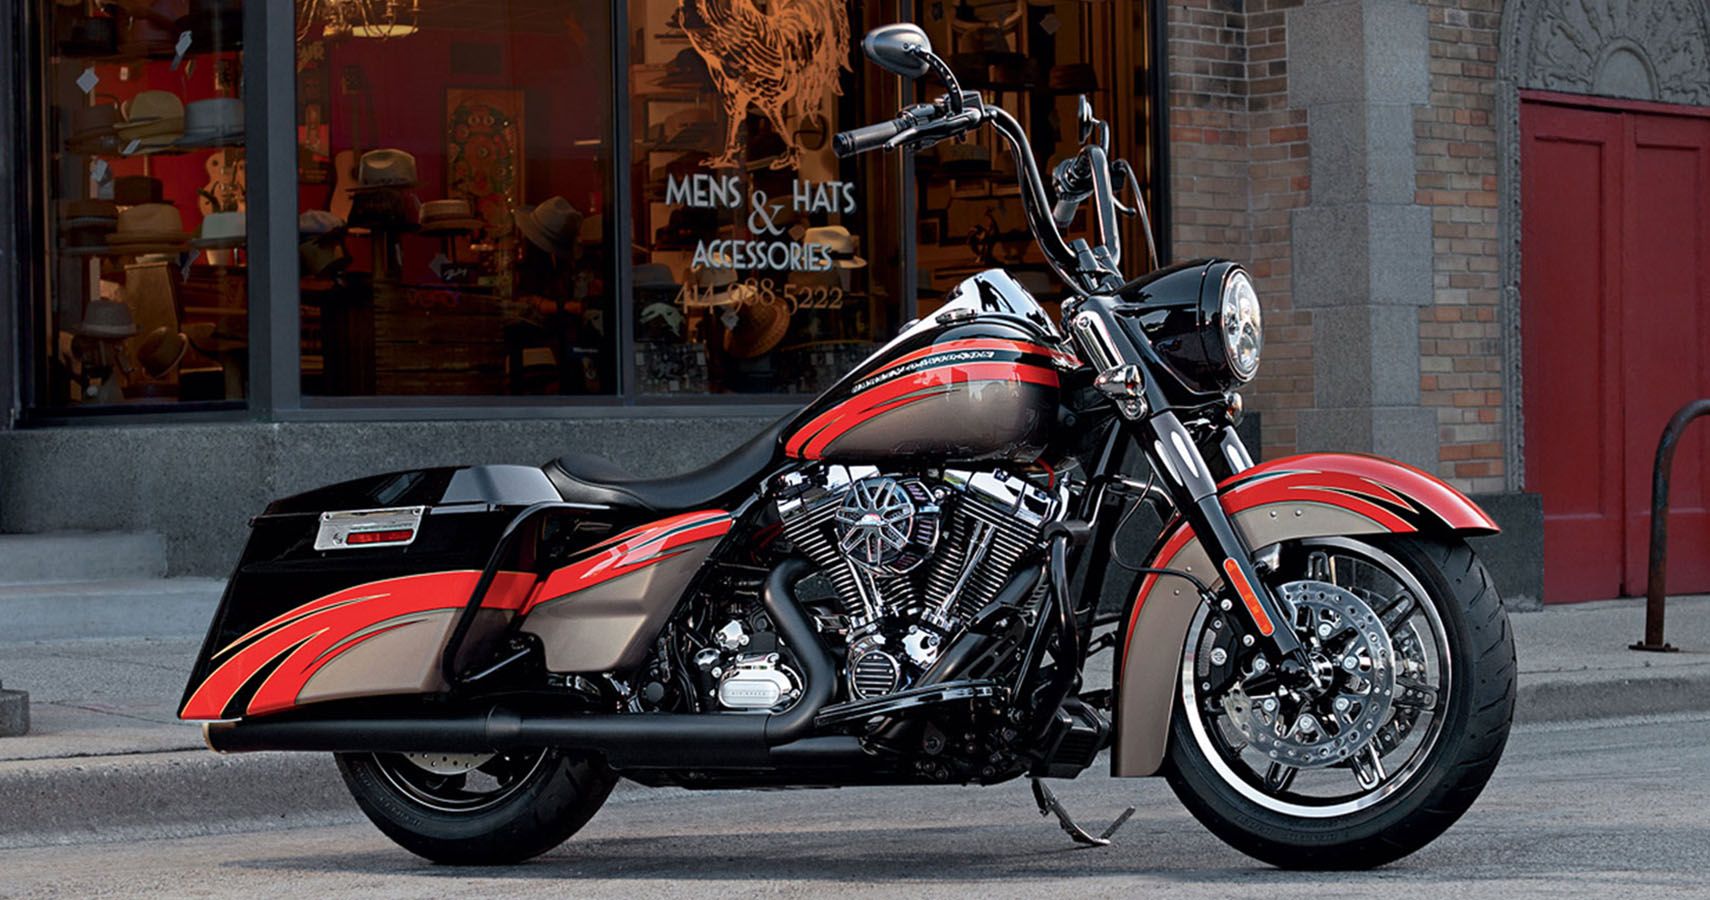 Harley Davidson Nail Art Tutorial for Beginners - wide 2